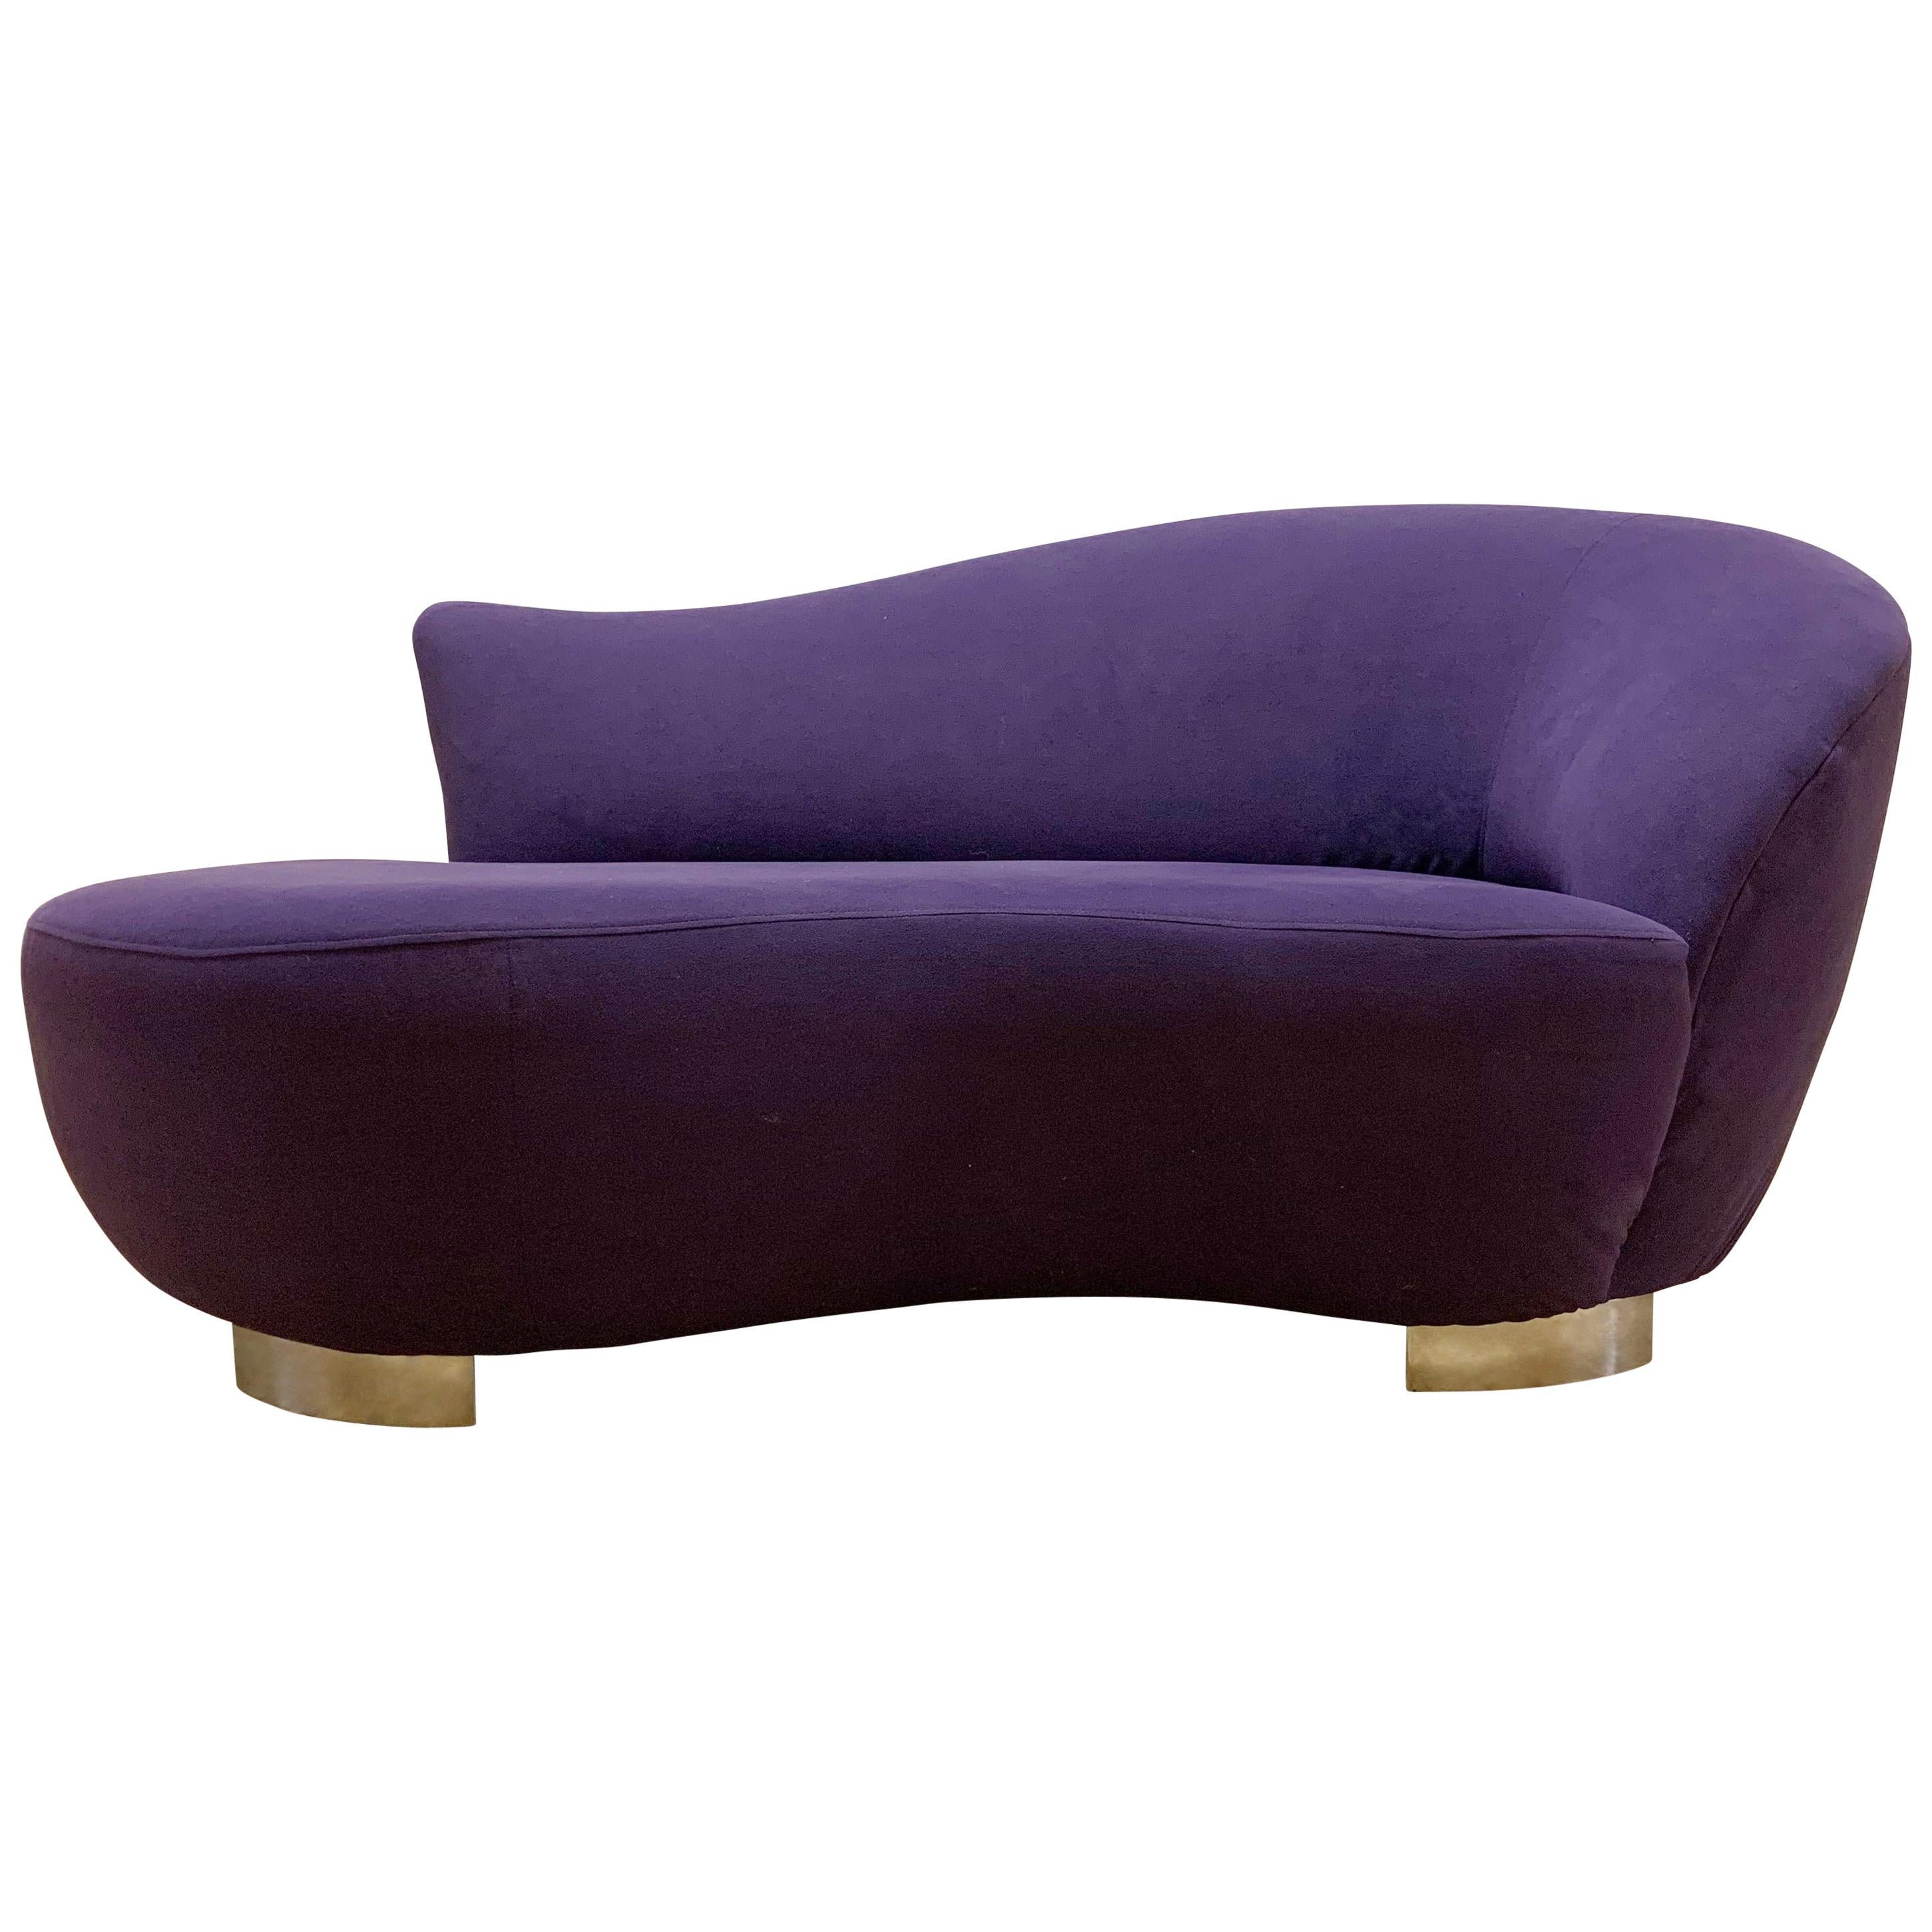 Vladimir Kagan Chaise Lounge Loveseat Sofa